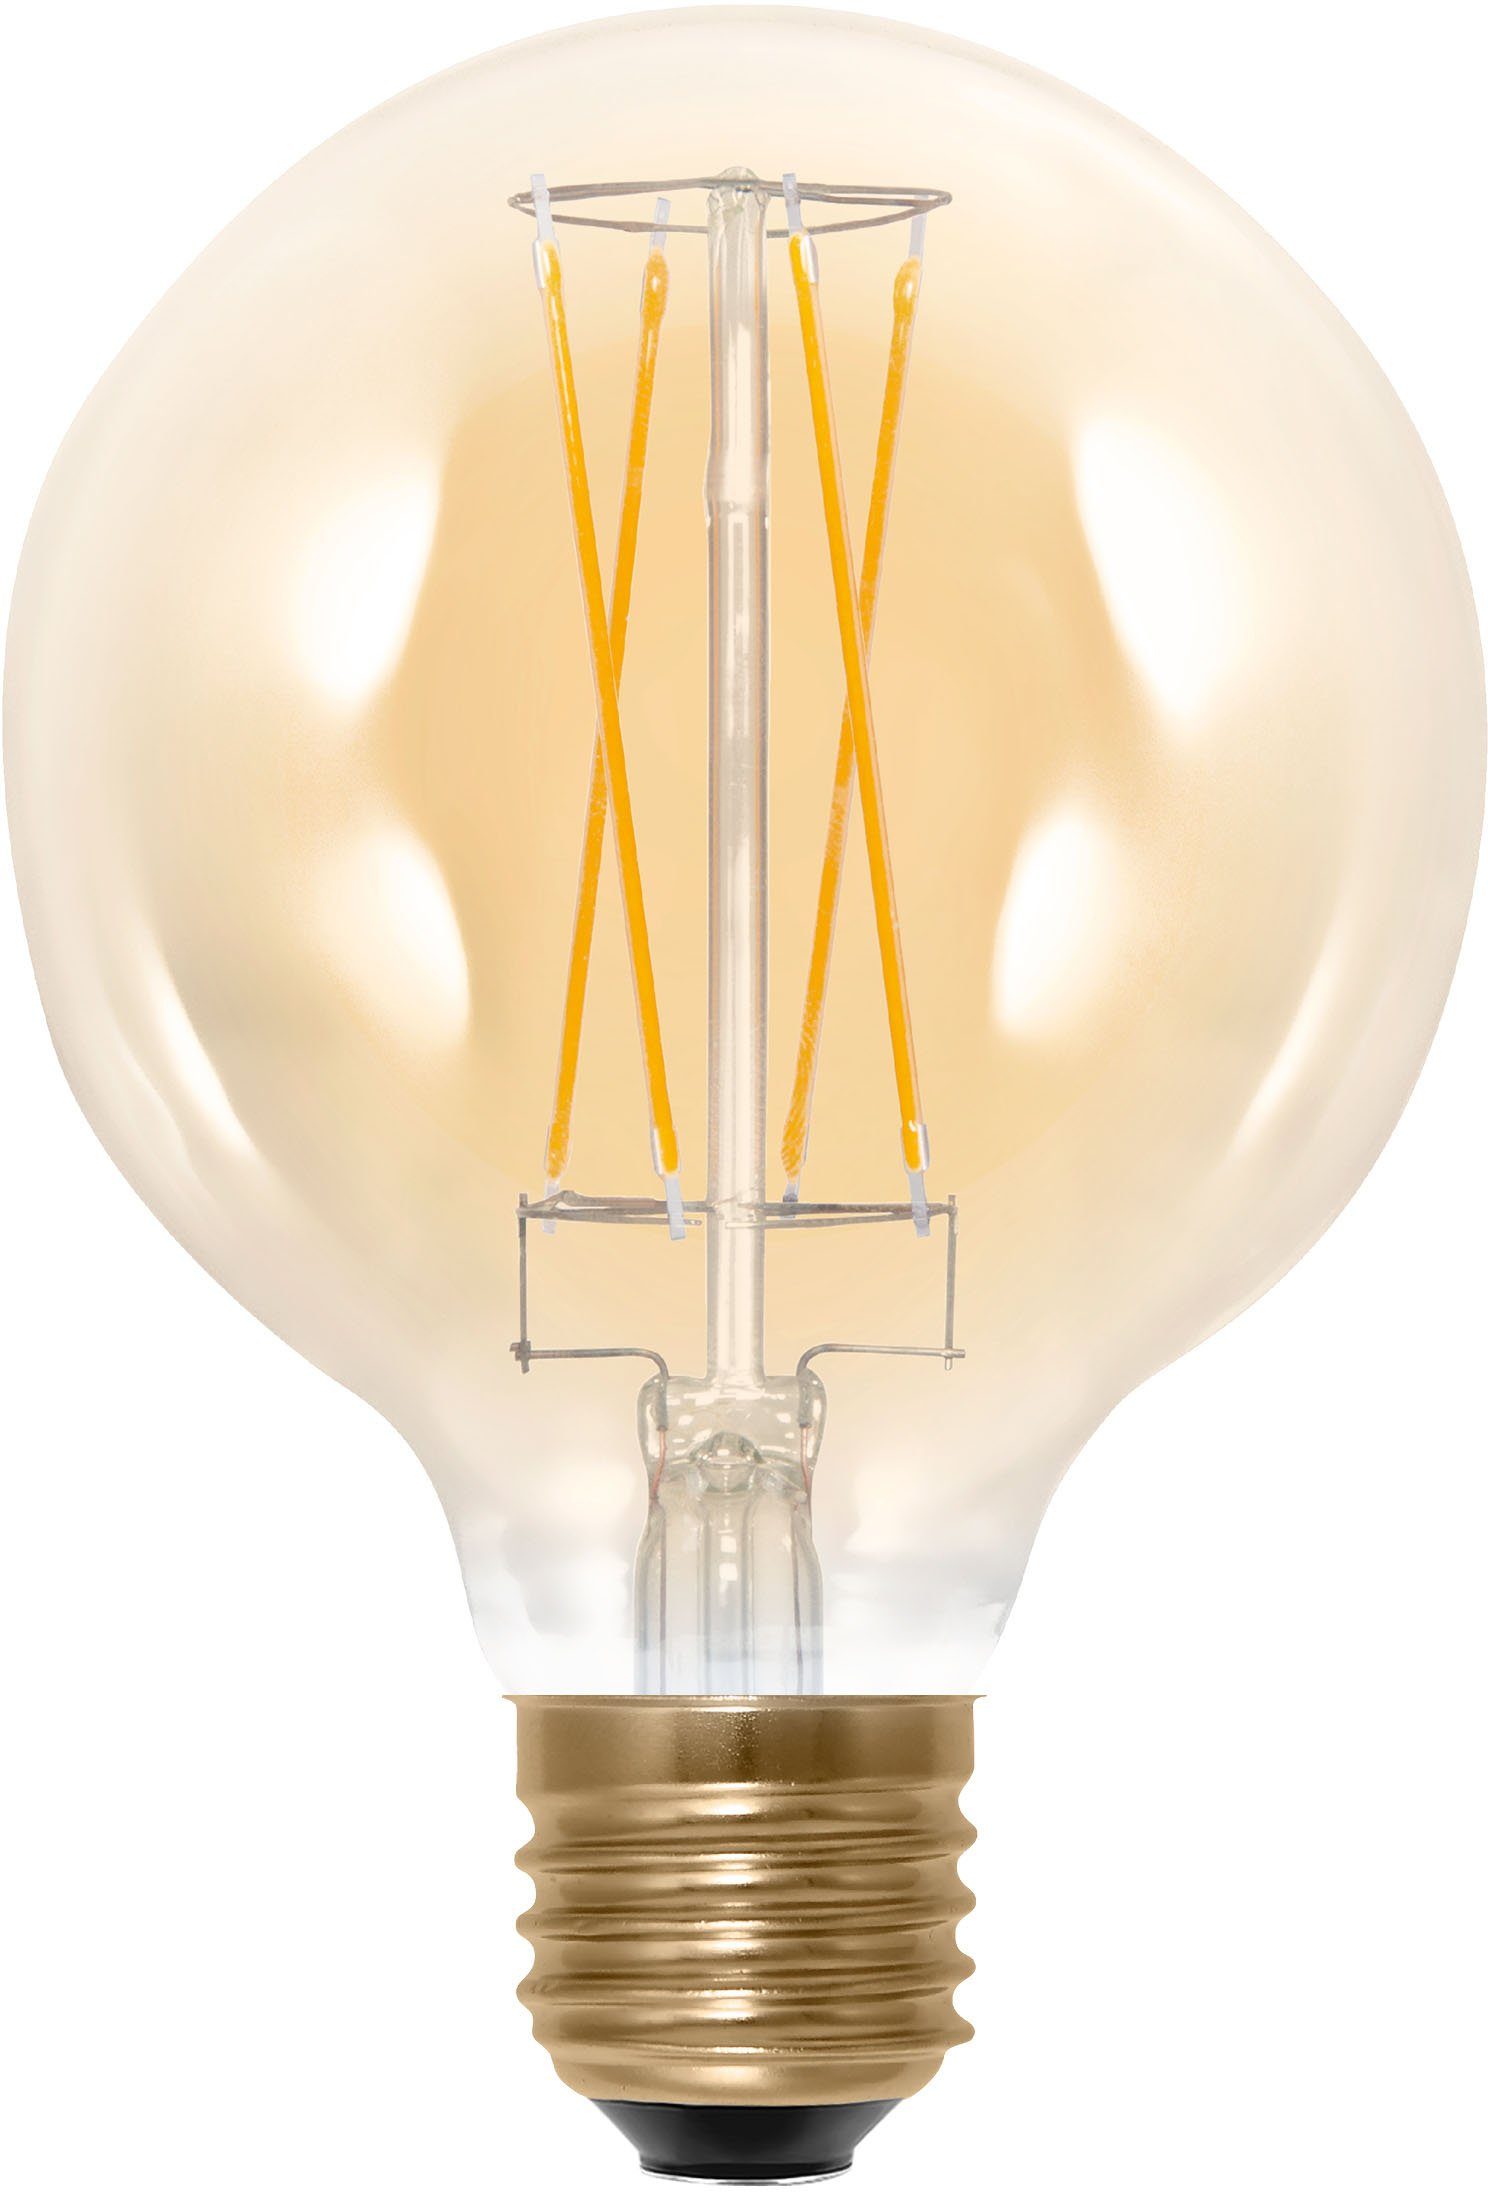 SEGULA LED-Leuchtmittel LED Globe 95 gold, E27, Warmweiß, dimmbar, E27, Globe 95, gold